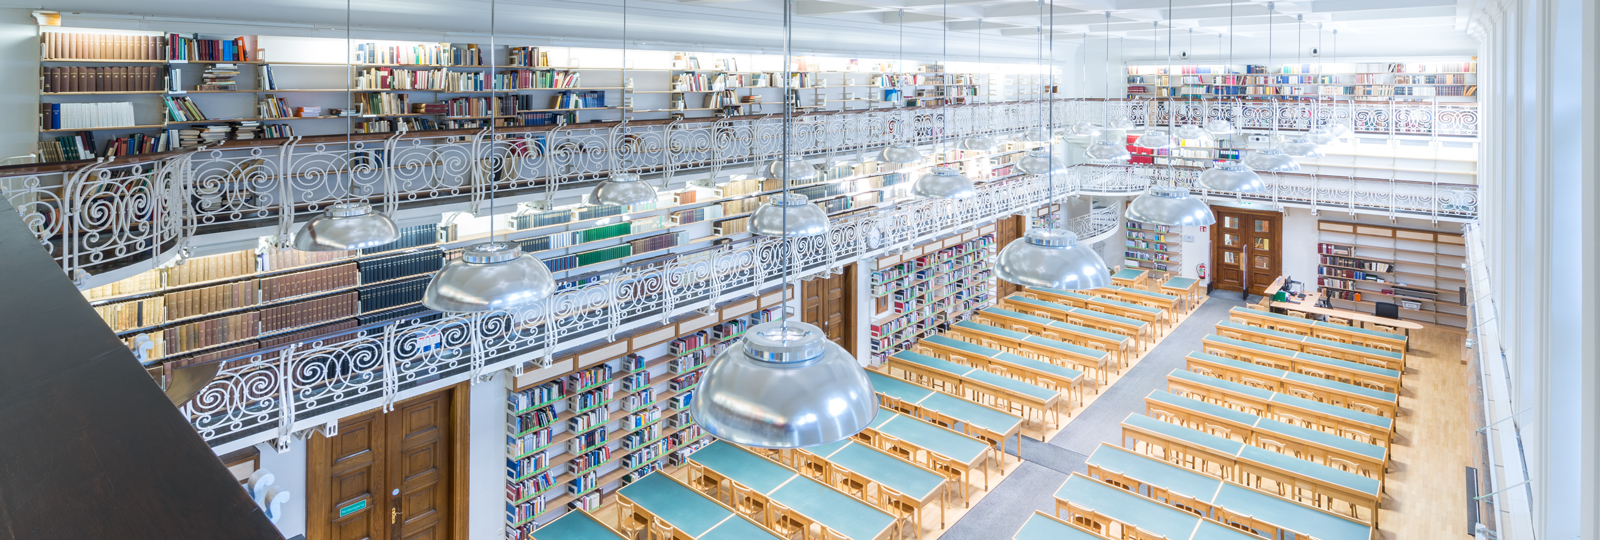 Lust for literature: The University Library, Innsbruck